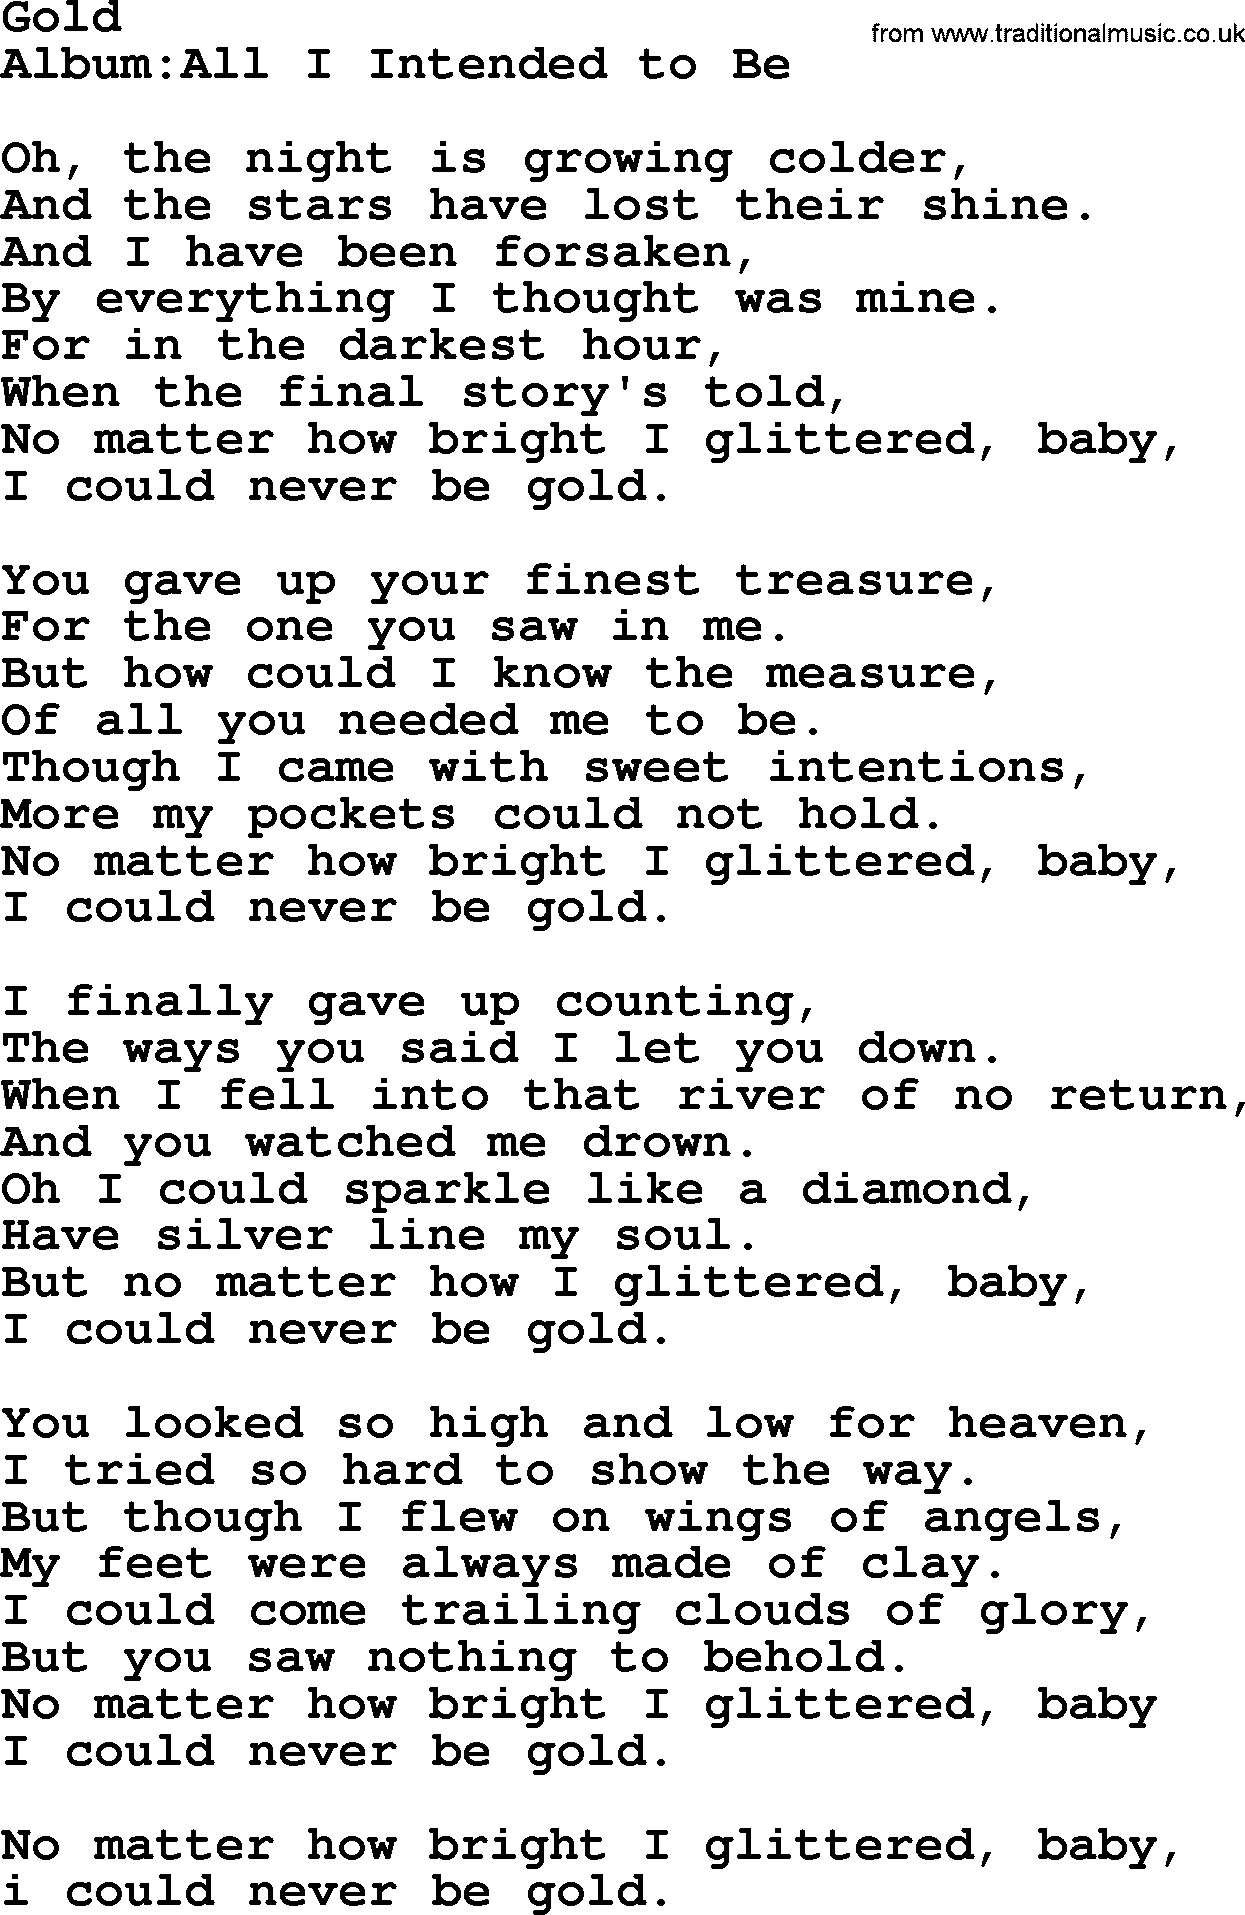 Emmylou Harris song: Gold lyrics